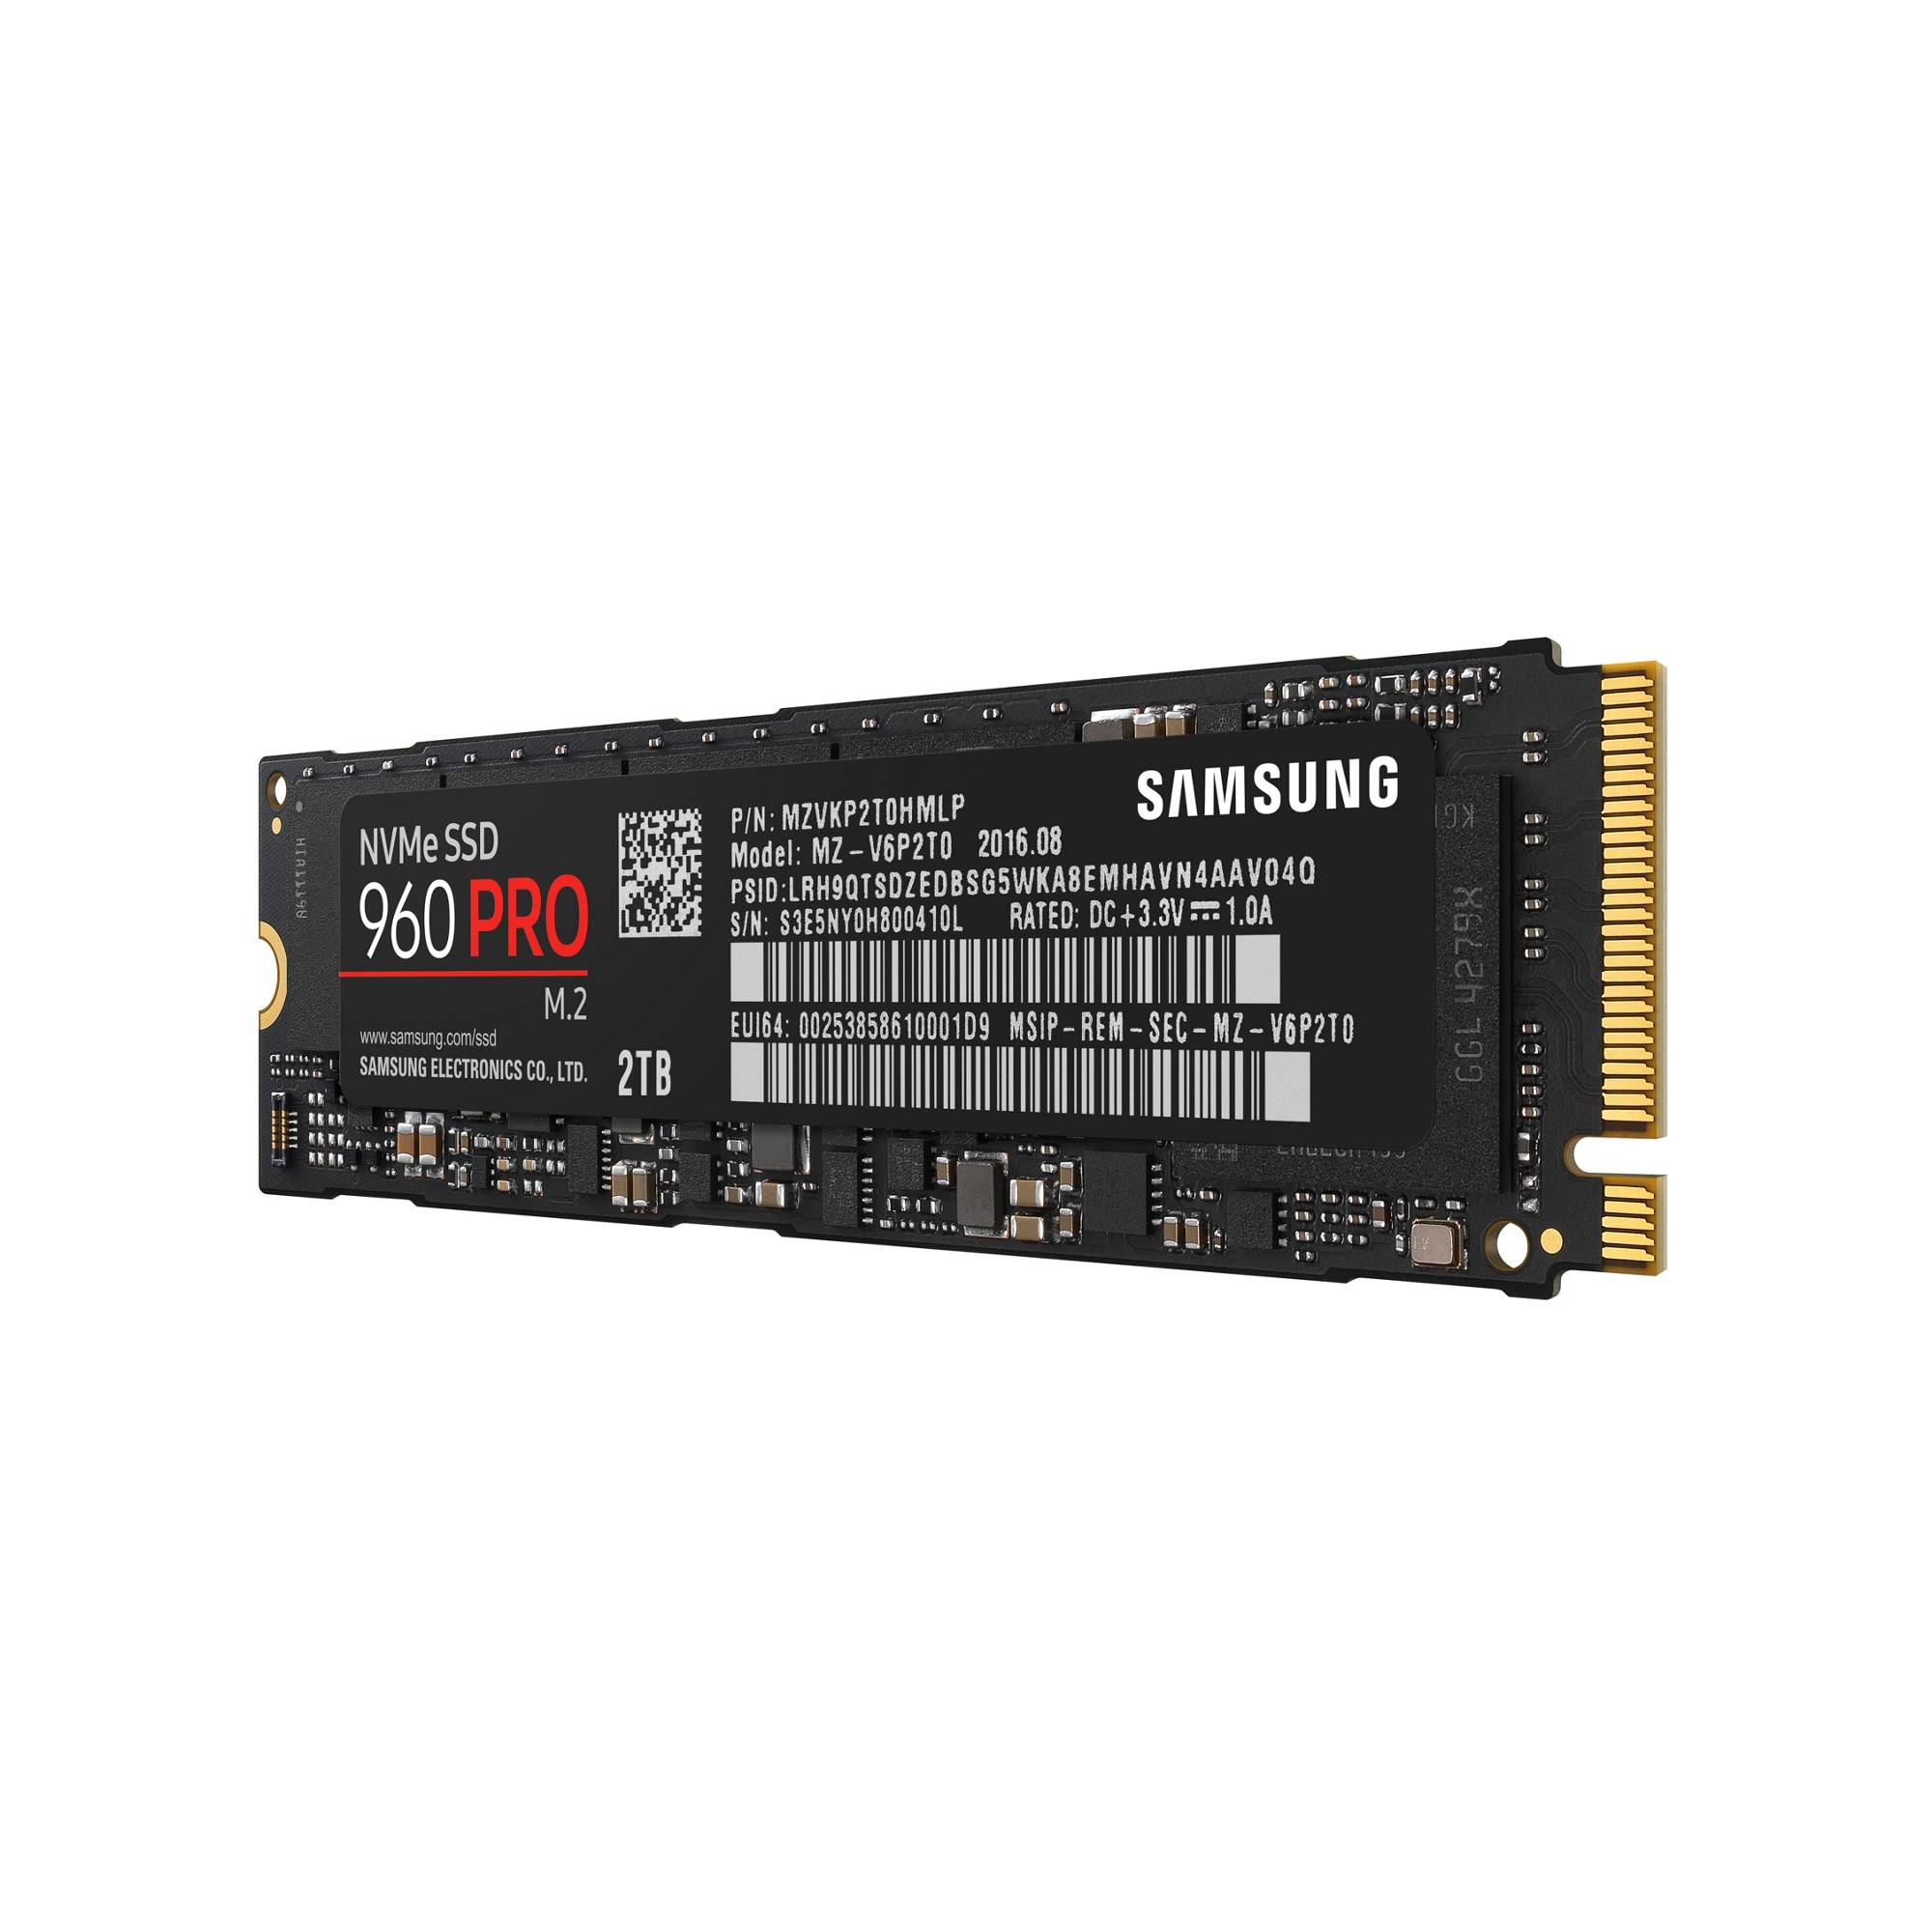 Thumbnail image of SSD 960 PRO NVMe M.2 2TB